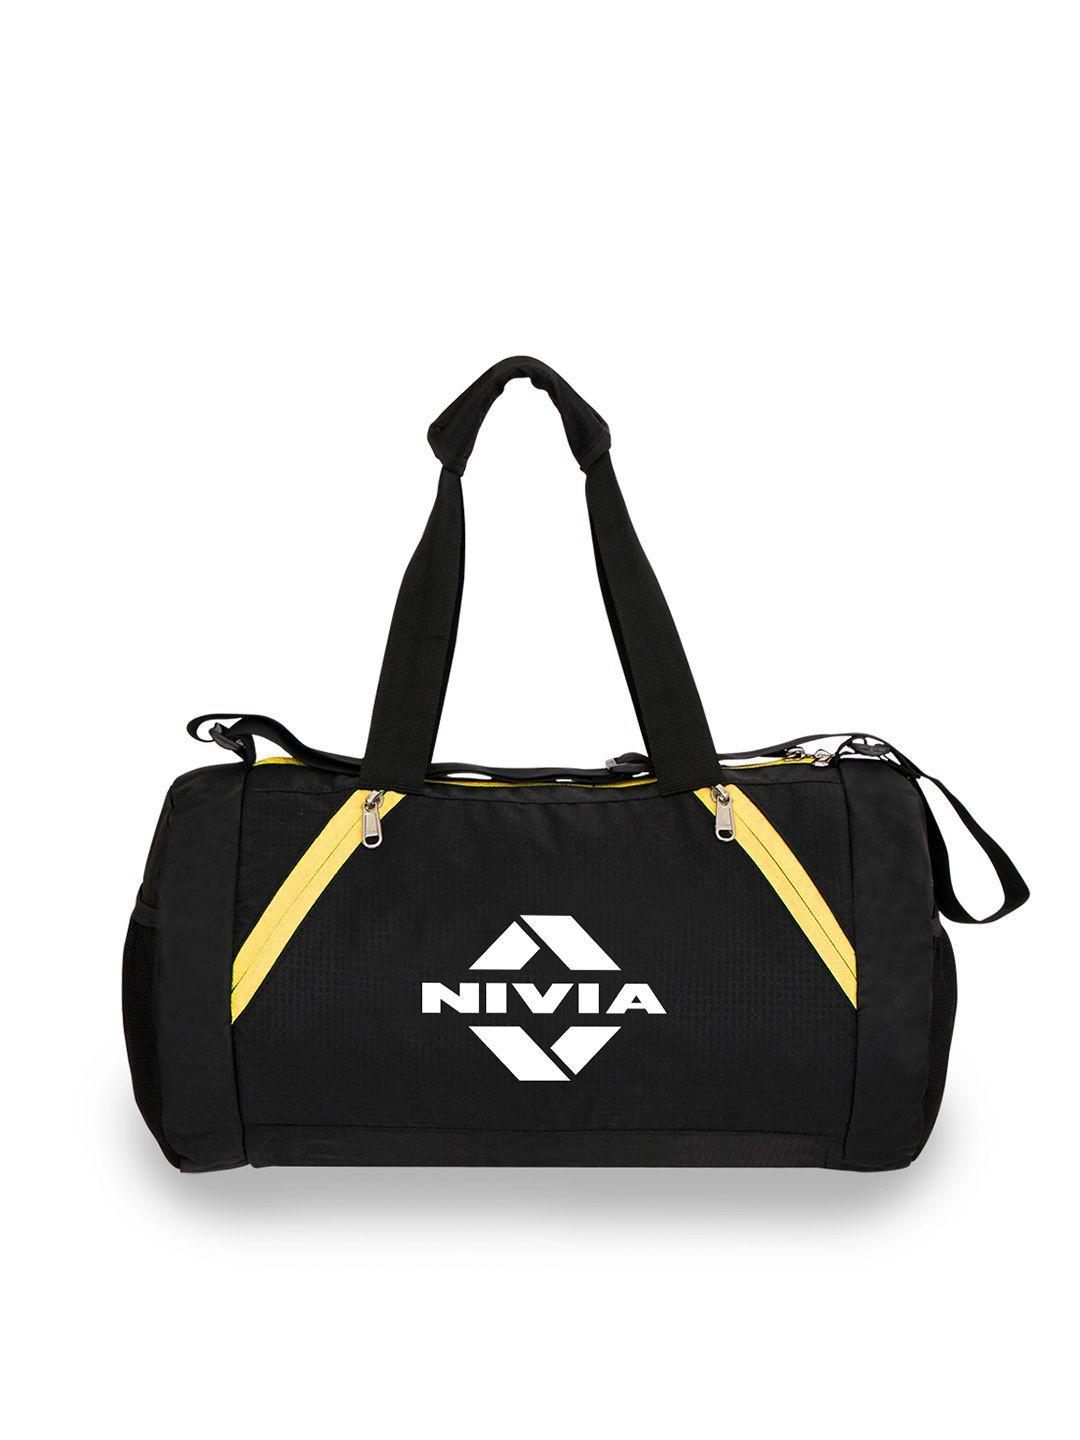 nivia black & yellow printed gym duffel bag